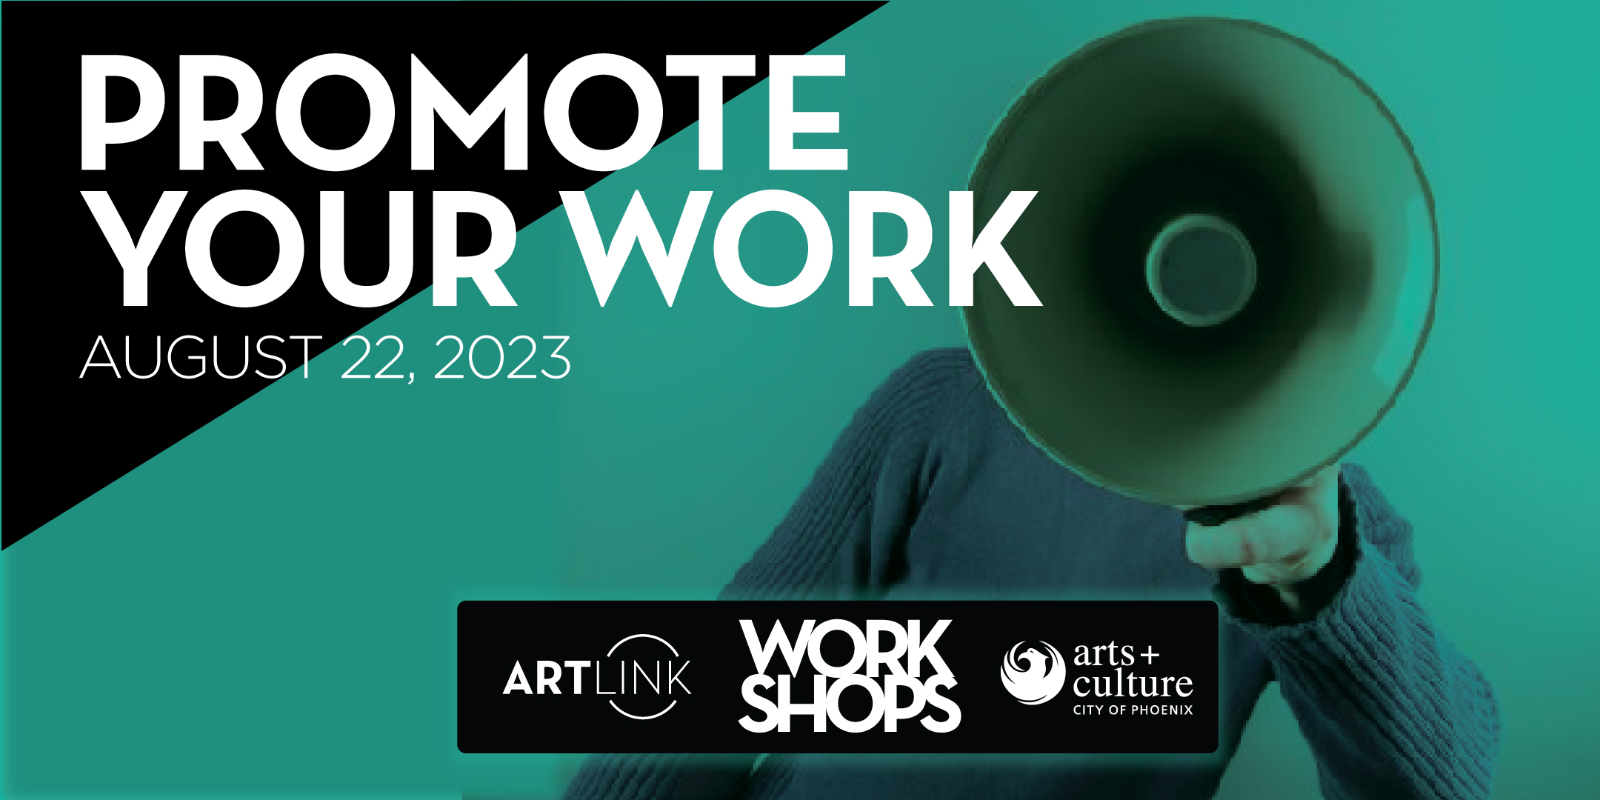 Promote Your Art Work Workshop - August 22, 2023